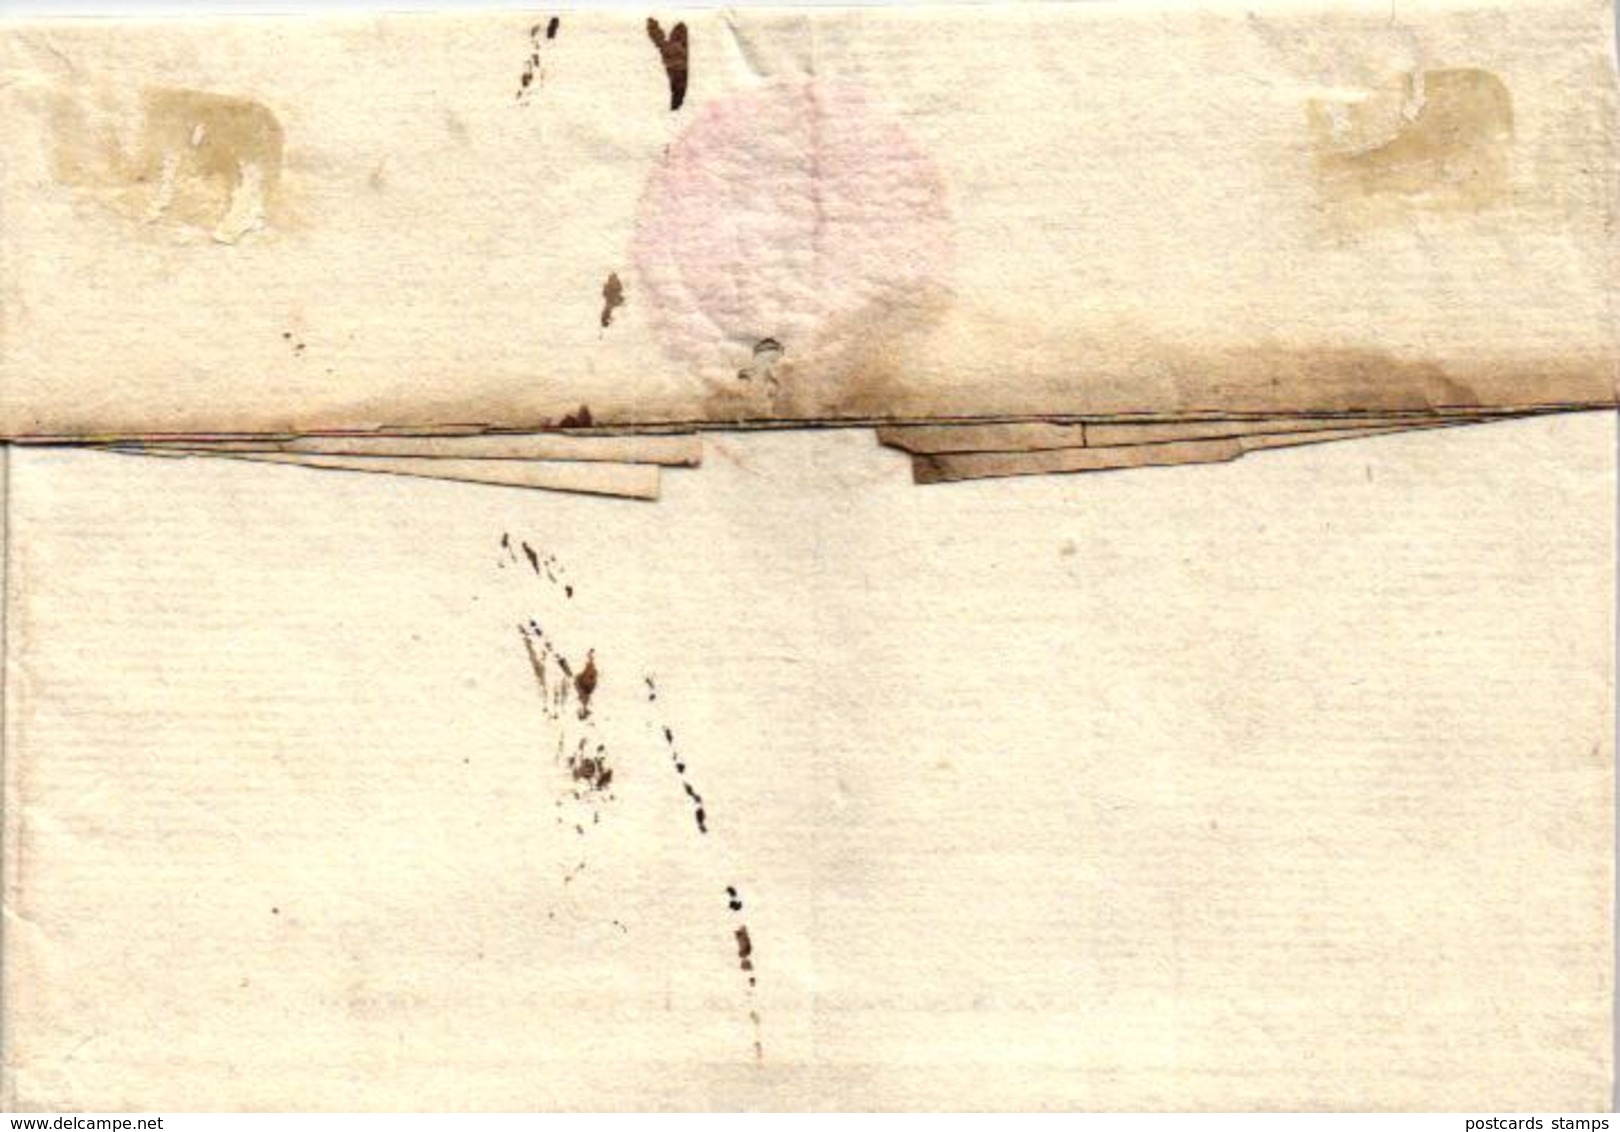 LIEGE "DE LIEGE", 1791 Nach Bordeaux Versandt, Brief Mit Inhalt - 1714-1794 (Paises Bajos Austriacos)